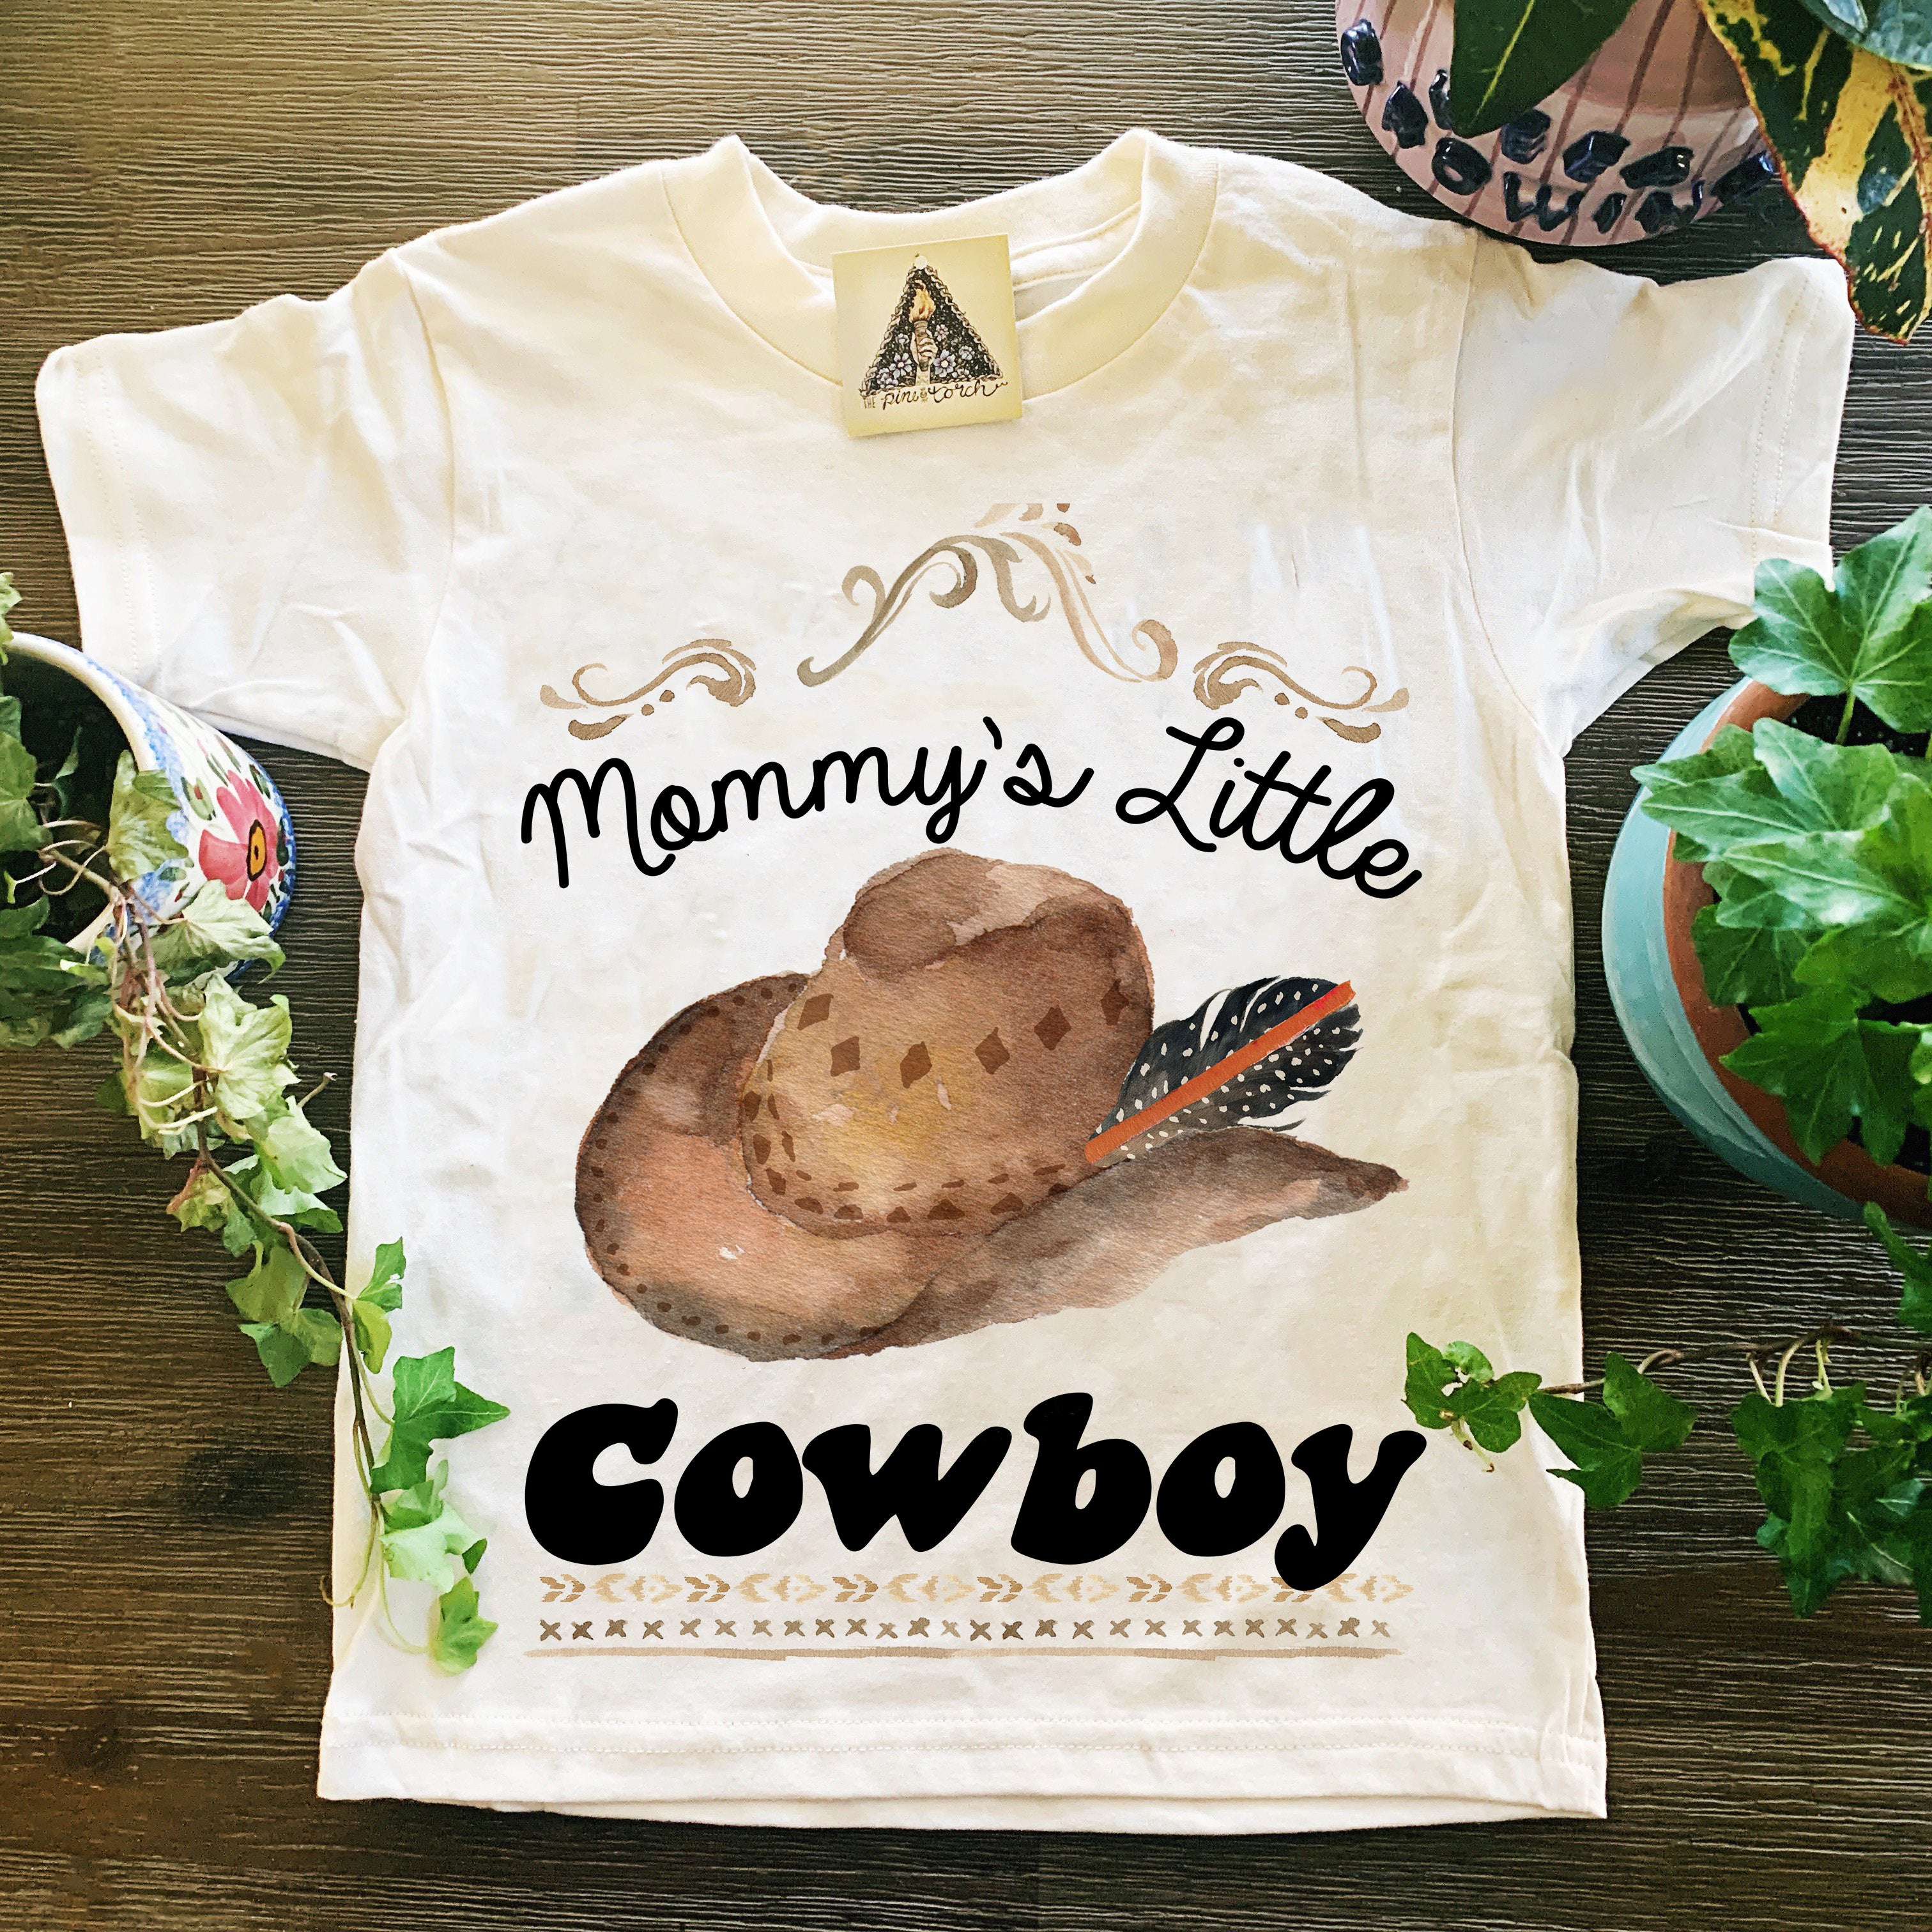 « MOMMY'S LITTLE COWBOY » KID'S TEE